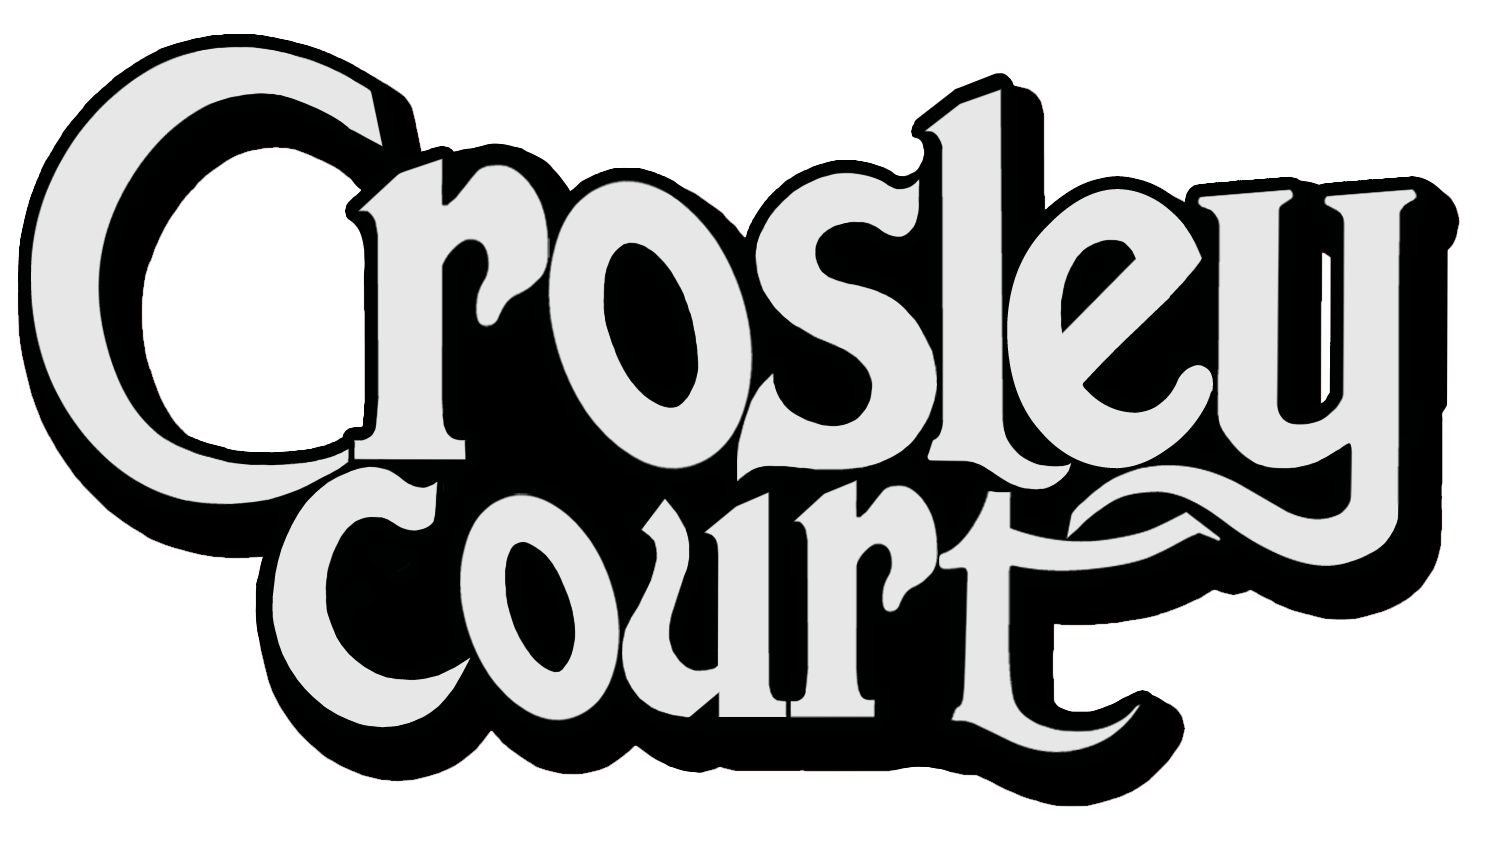 Crosley Court Logo